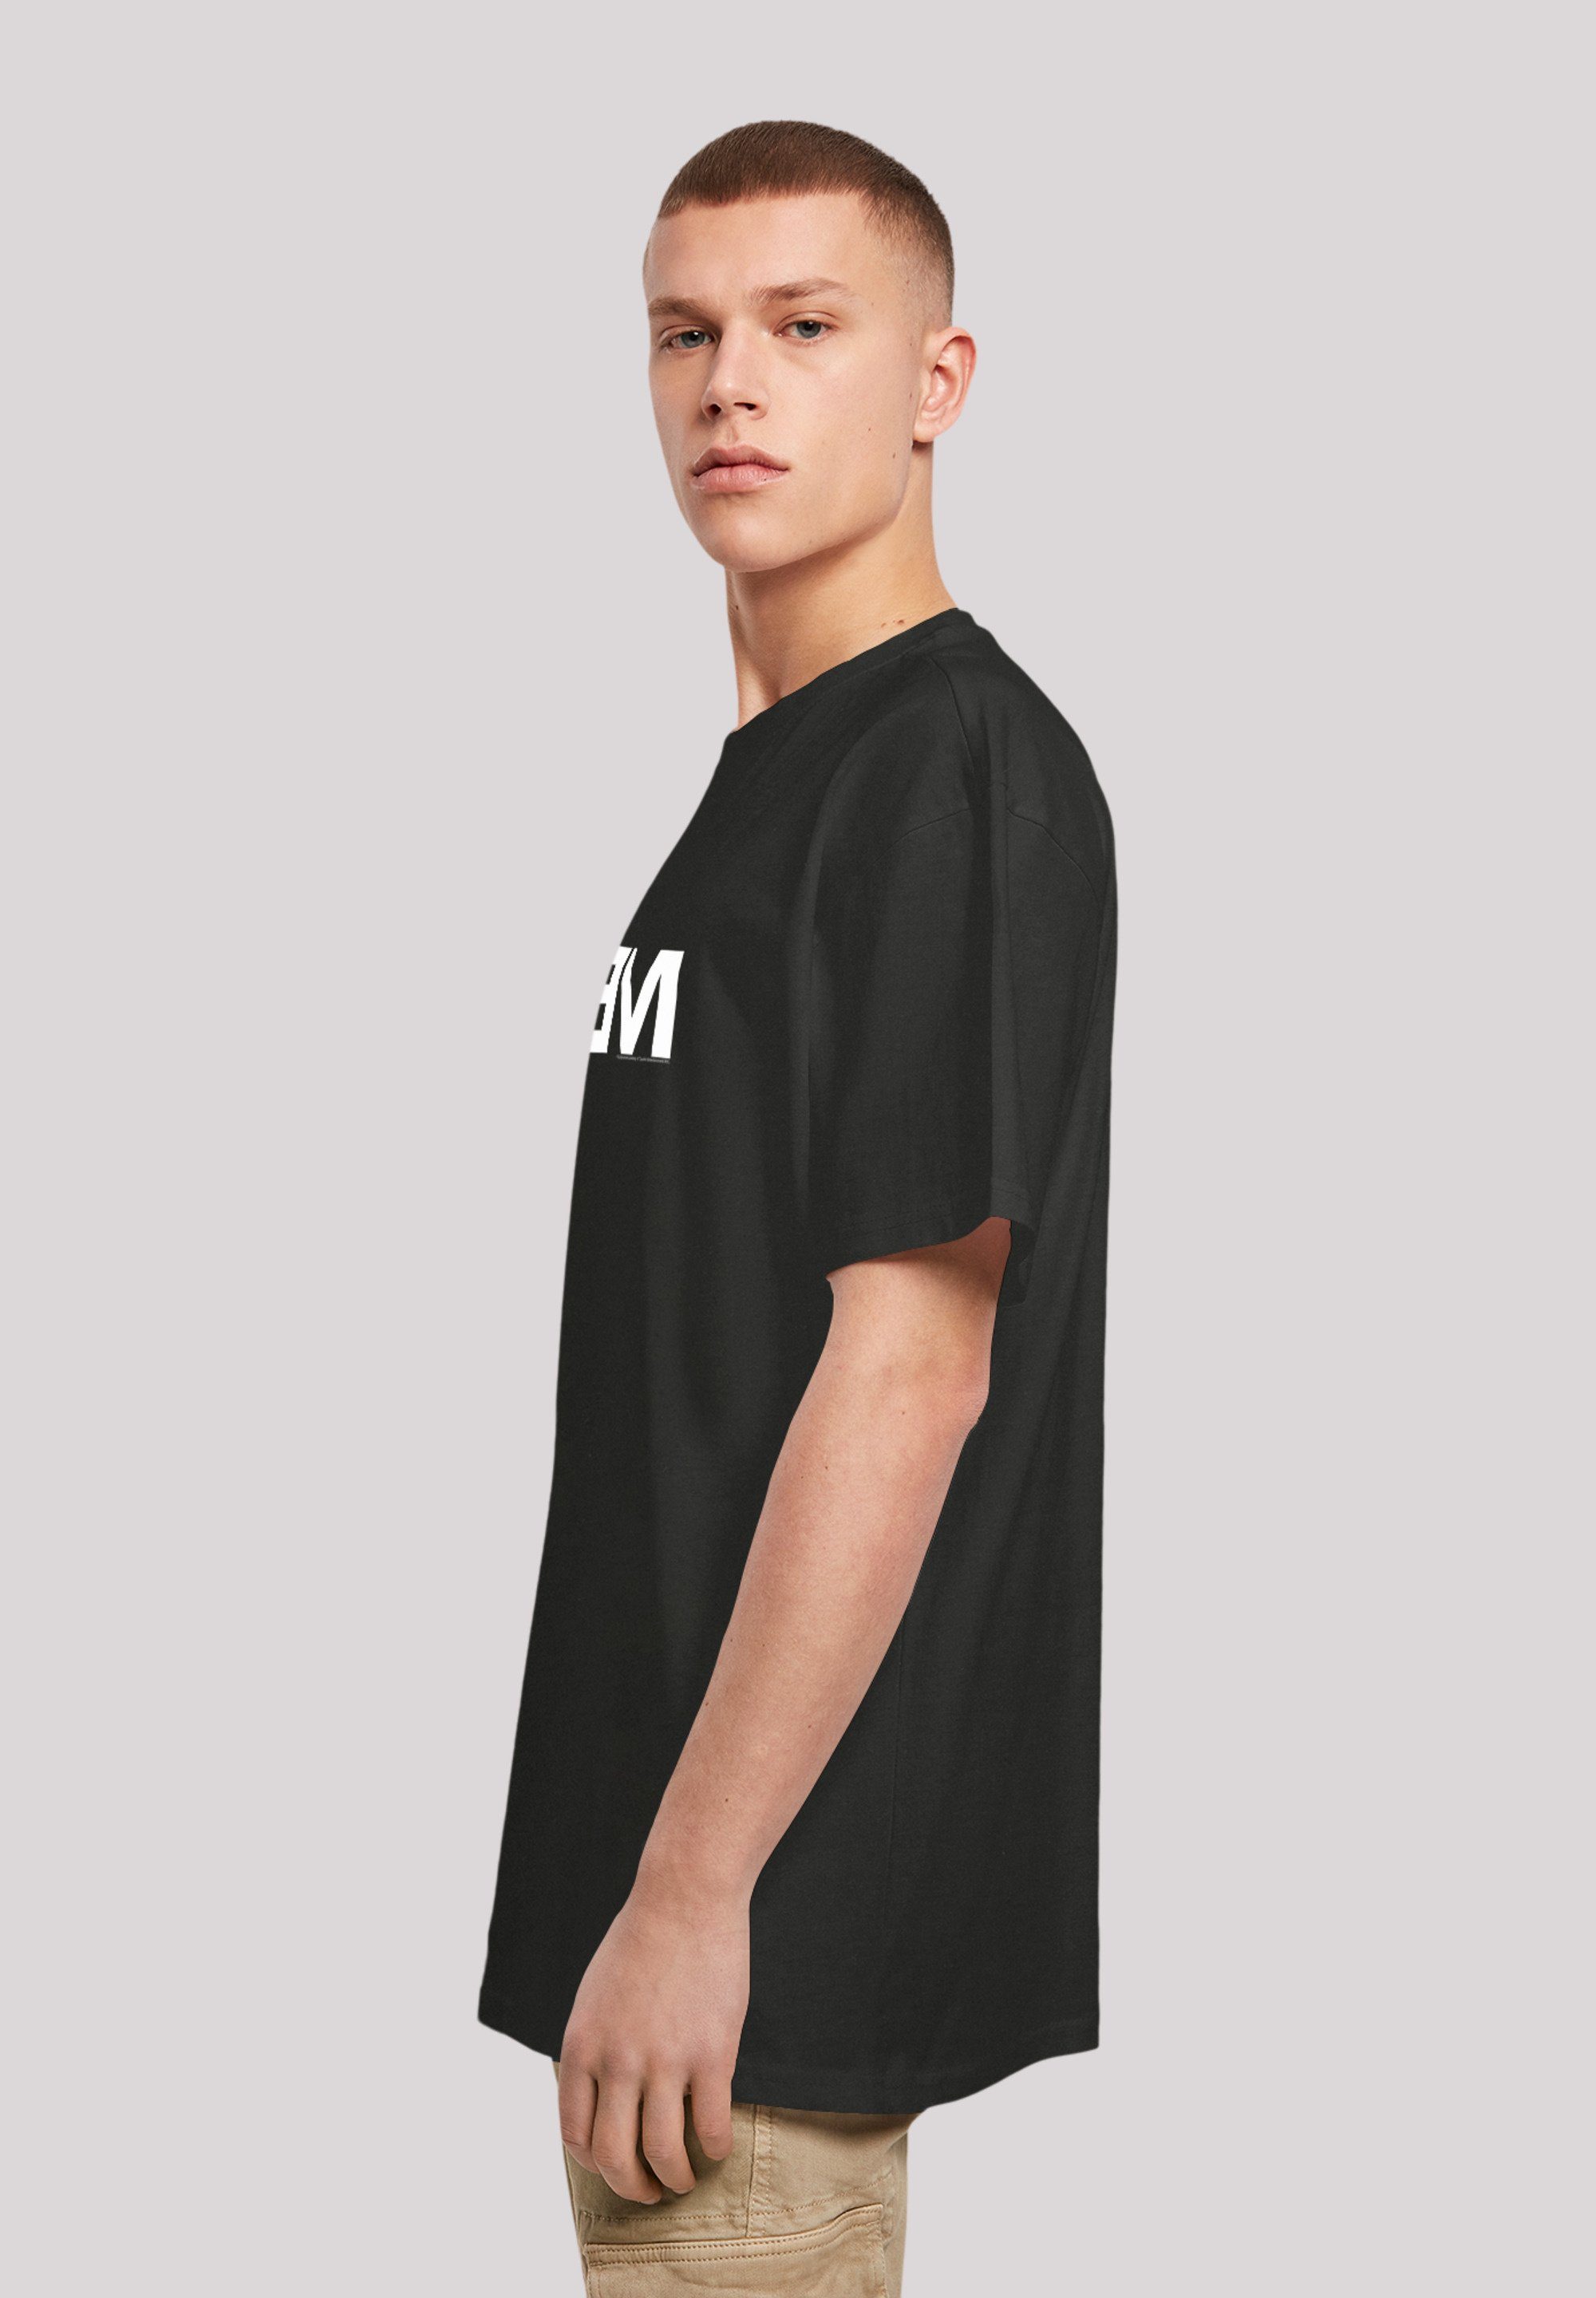 Hop Music Eminem T-Shirt Qualität, schwarz Premium Rap Hip Musik F4NT4STIC